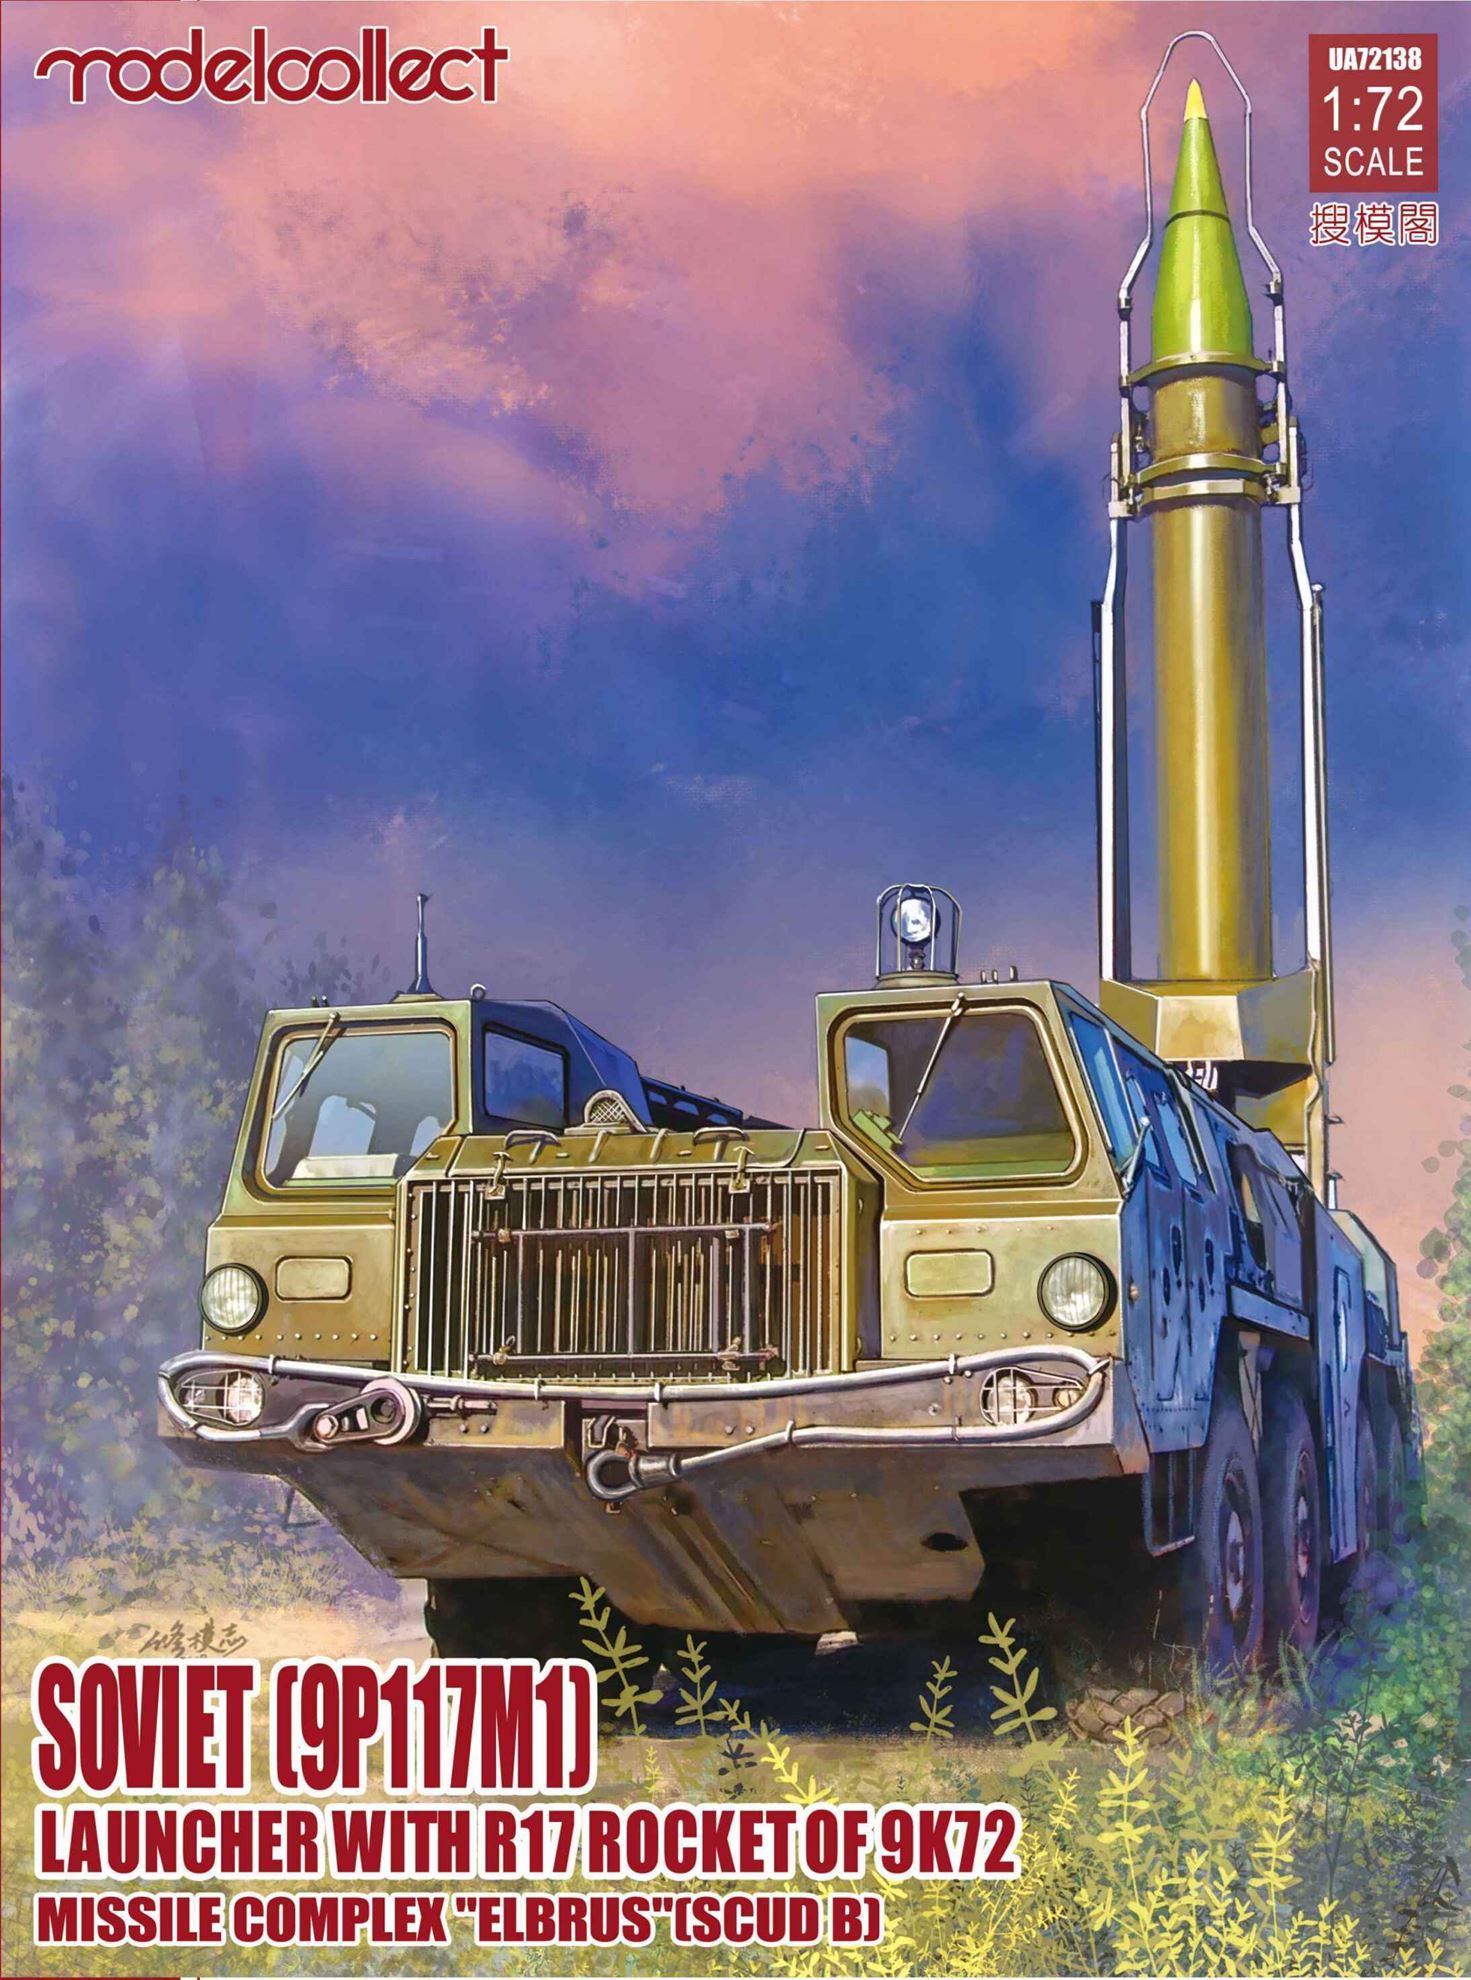 Soviet (9P117M1) Launcher R17 rocket of 9K72 missile complex "ELEBRUS"/SCUD B